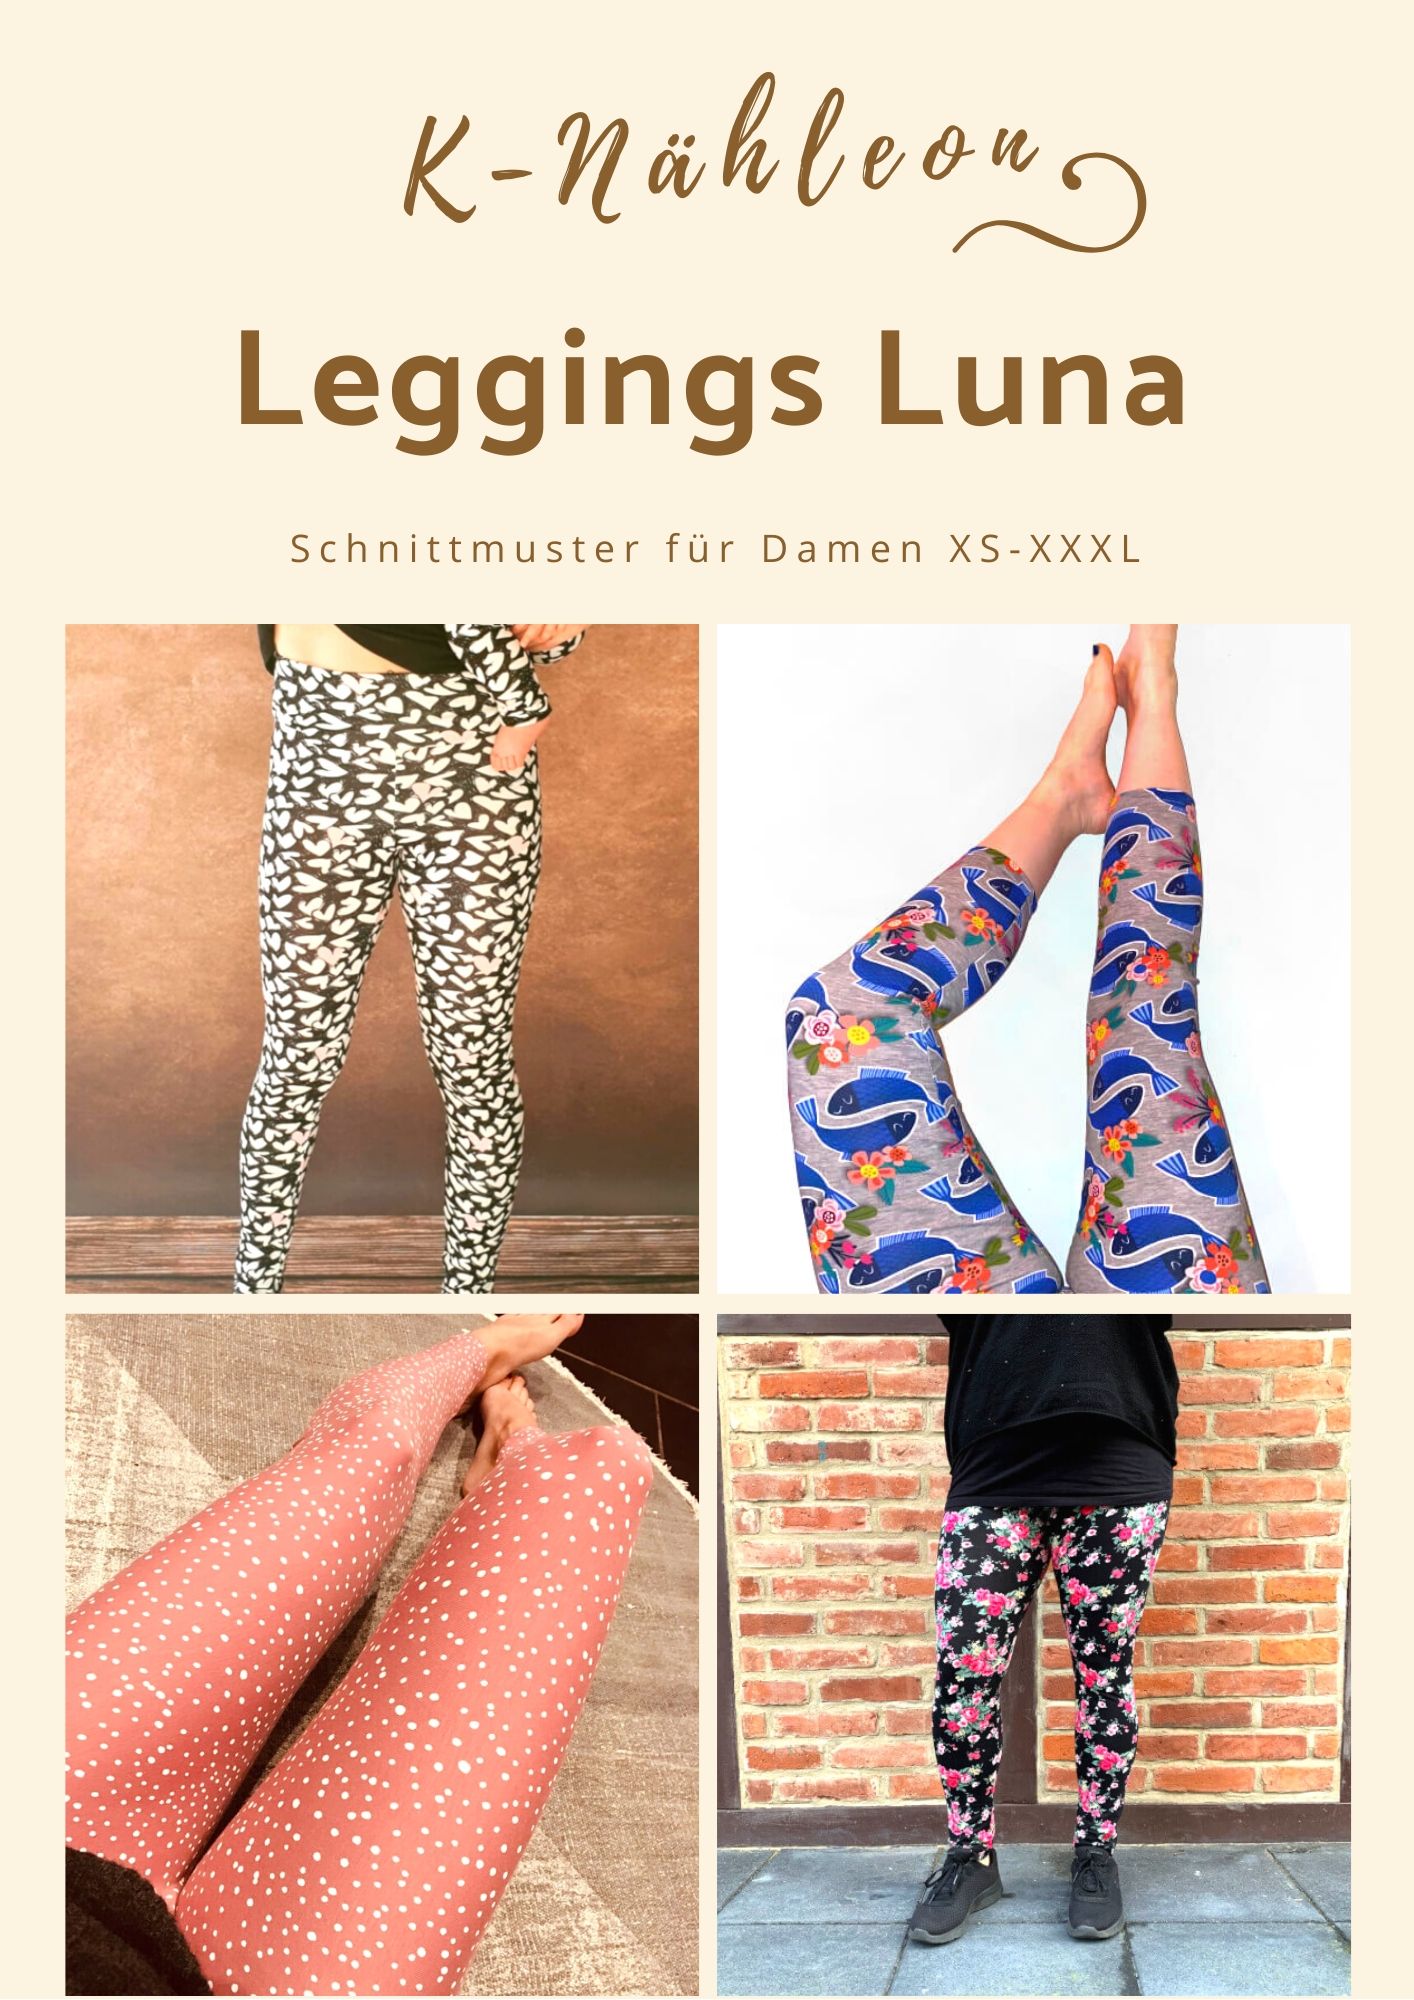 Schnittmuster Leggings Luna für Damen XS - XXXL